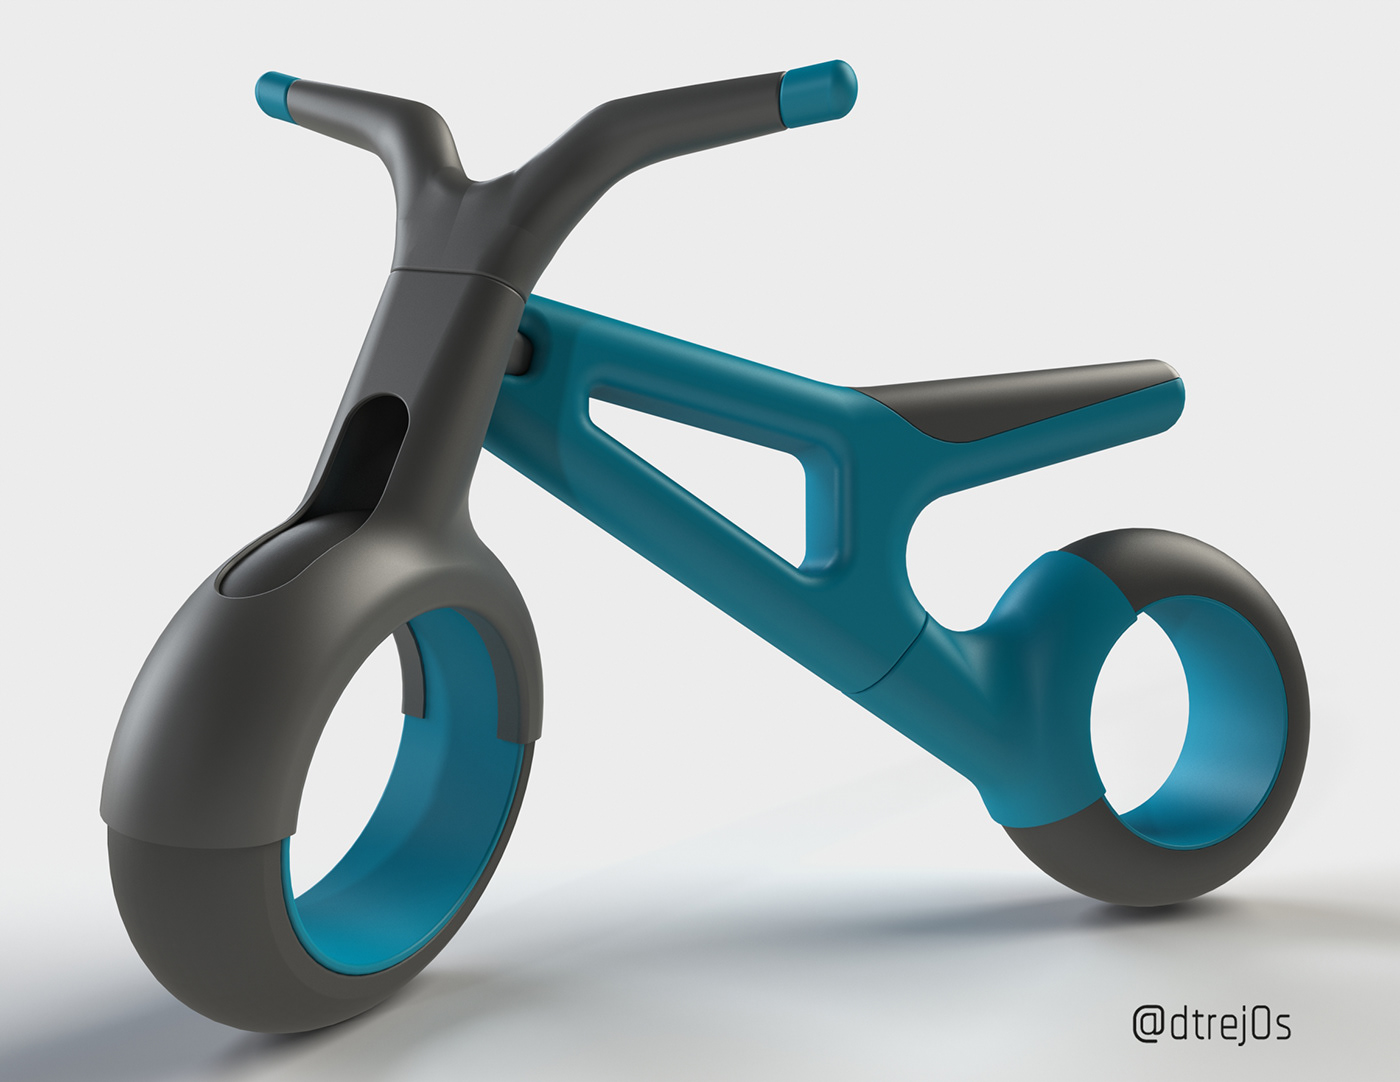 diseño juguetes producto productos infantiles motos infantiles diseño industrial transporte